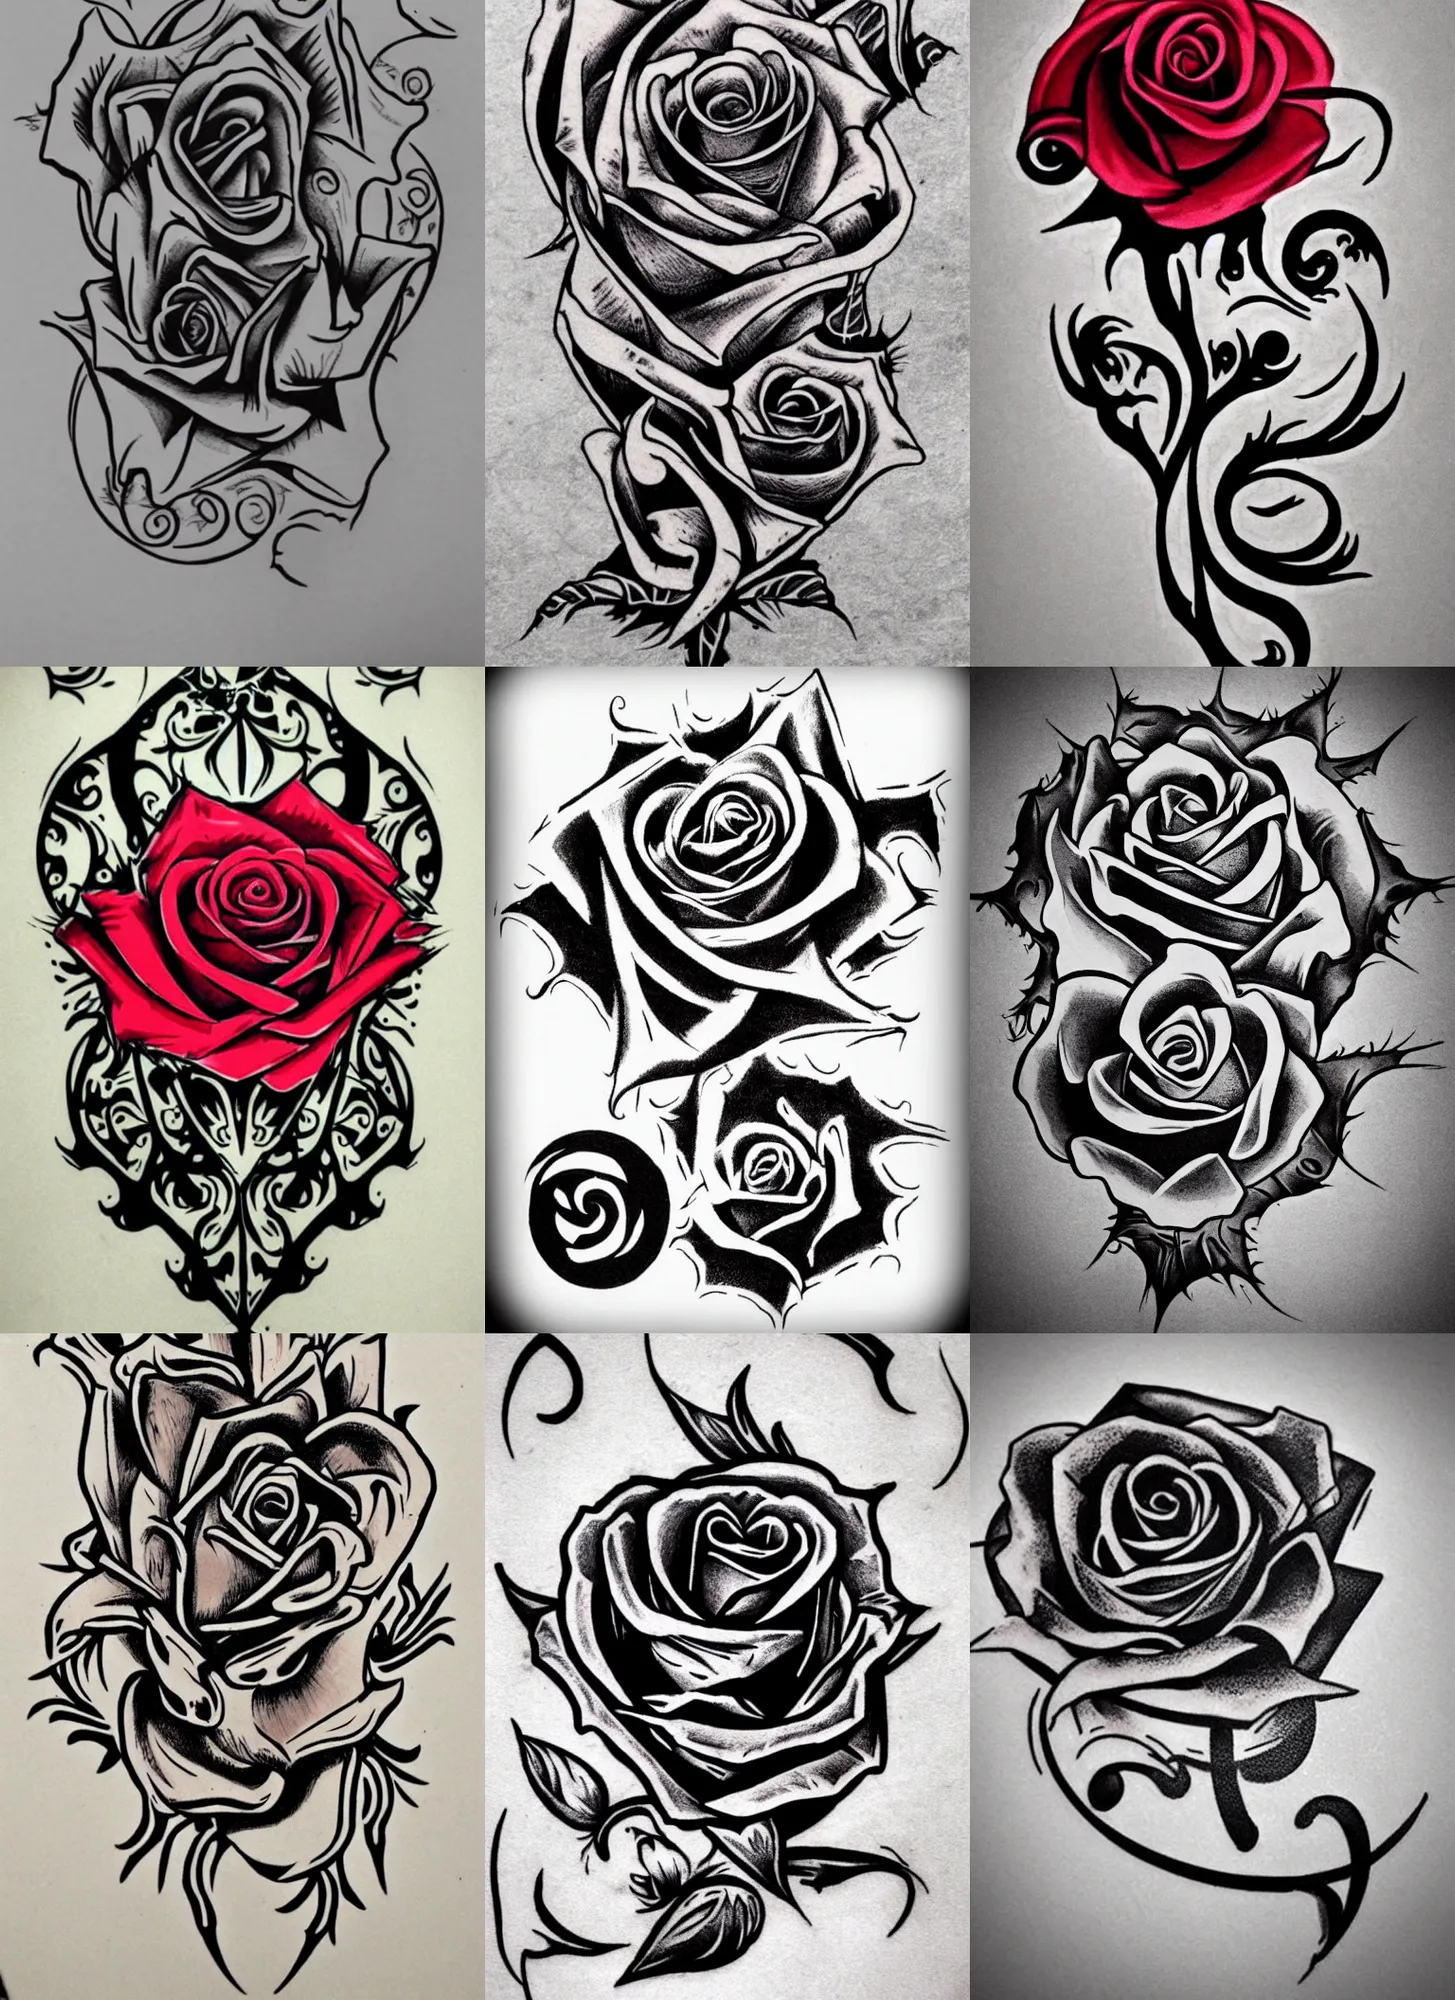 Prompt: Tattoo Design demonic, evil rose Stencil